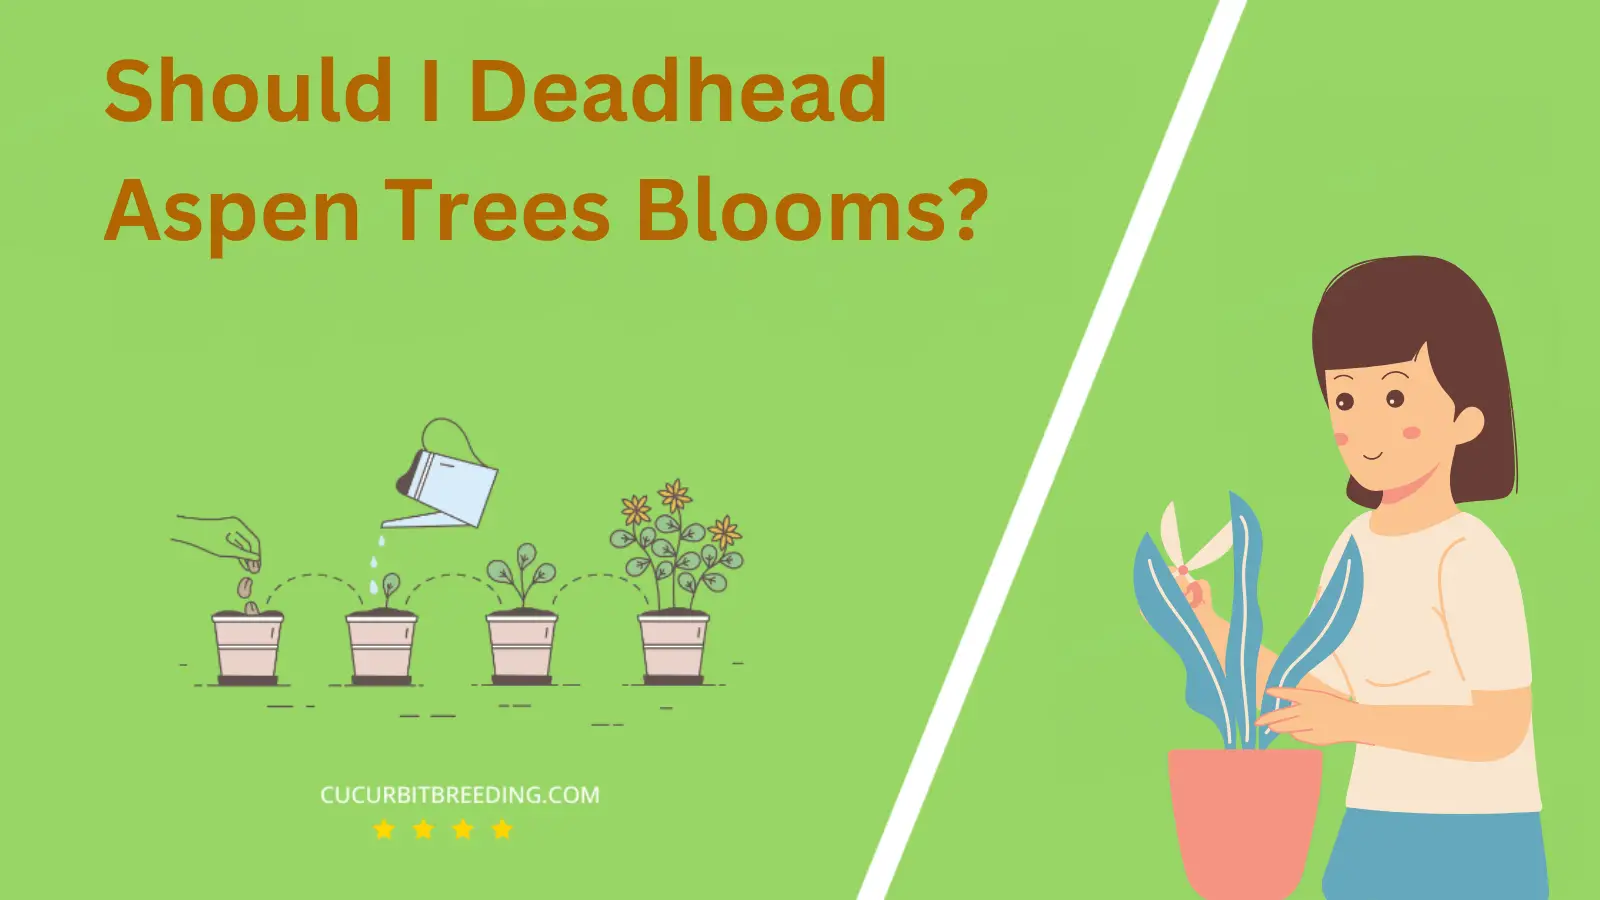 Should I Deadhead Aspen Trees Blooms?